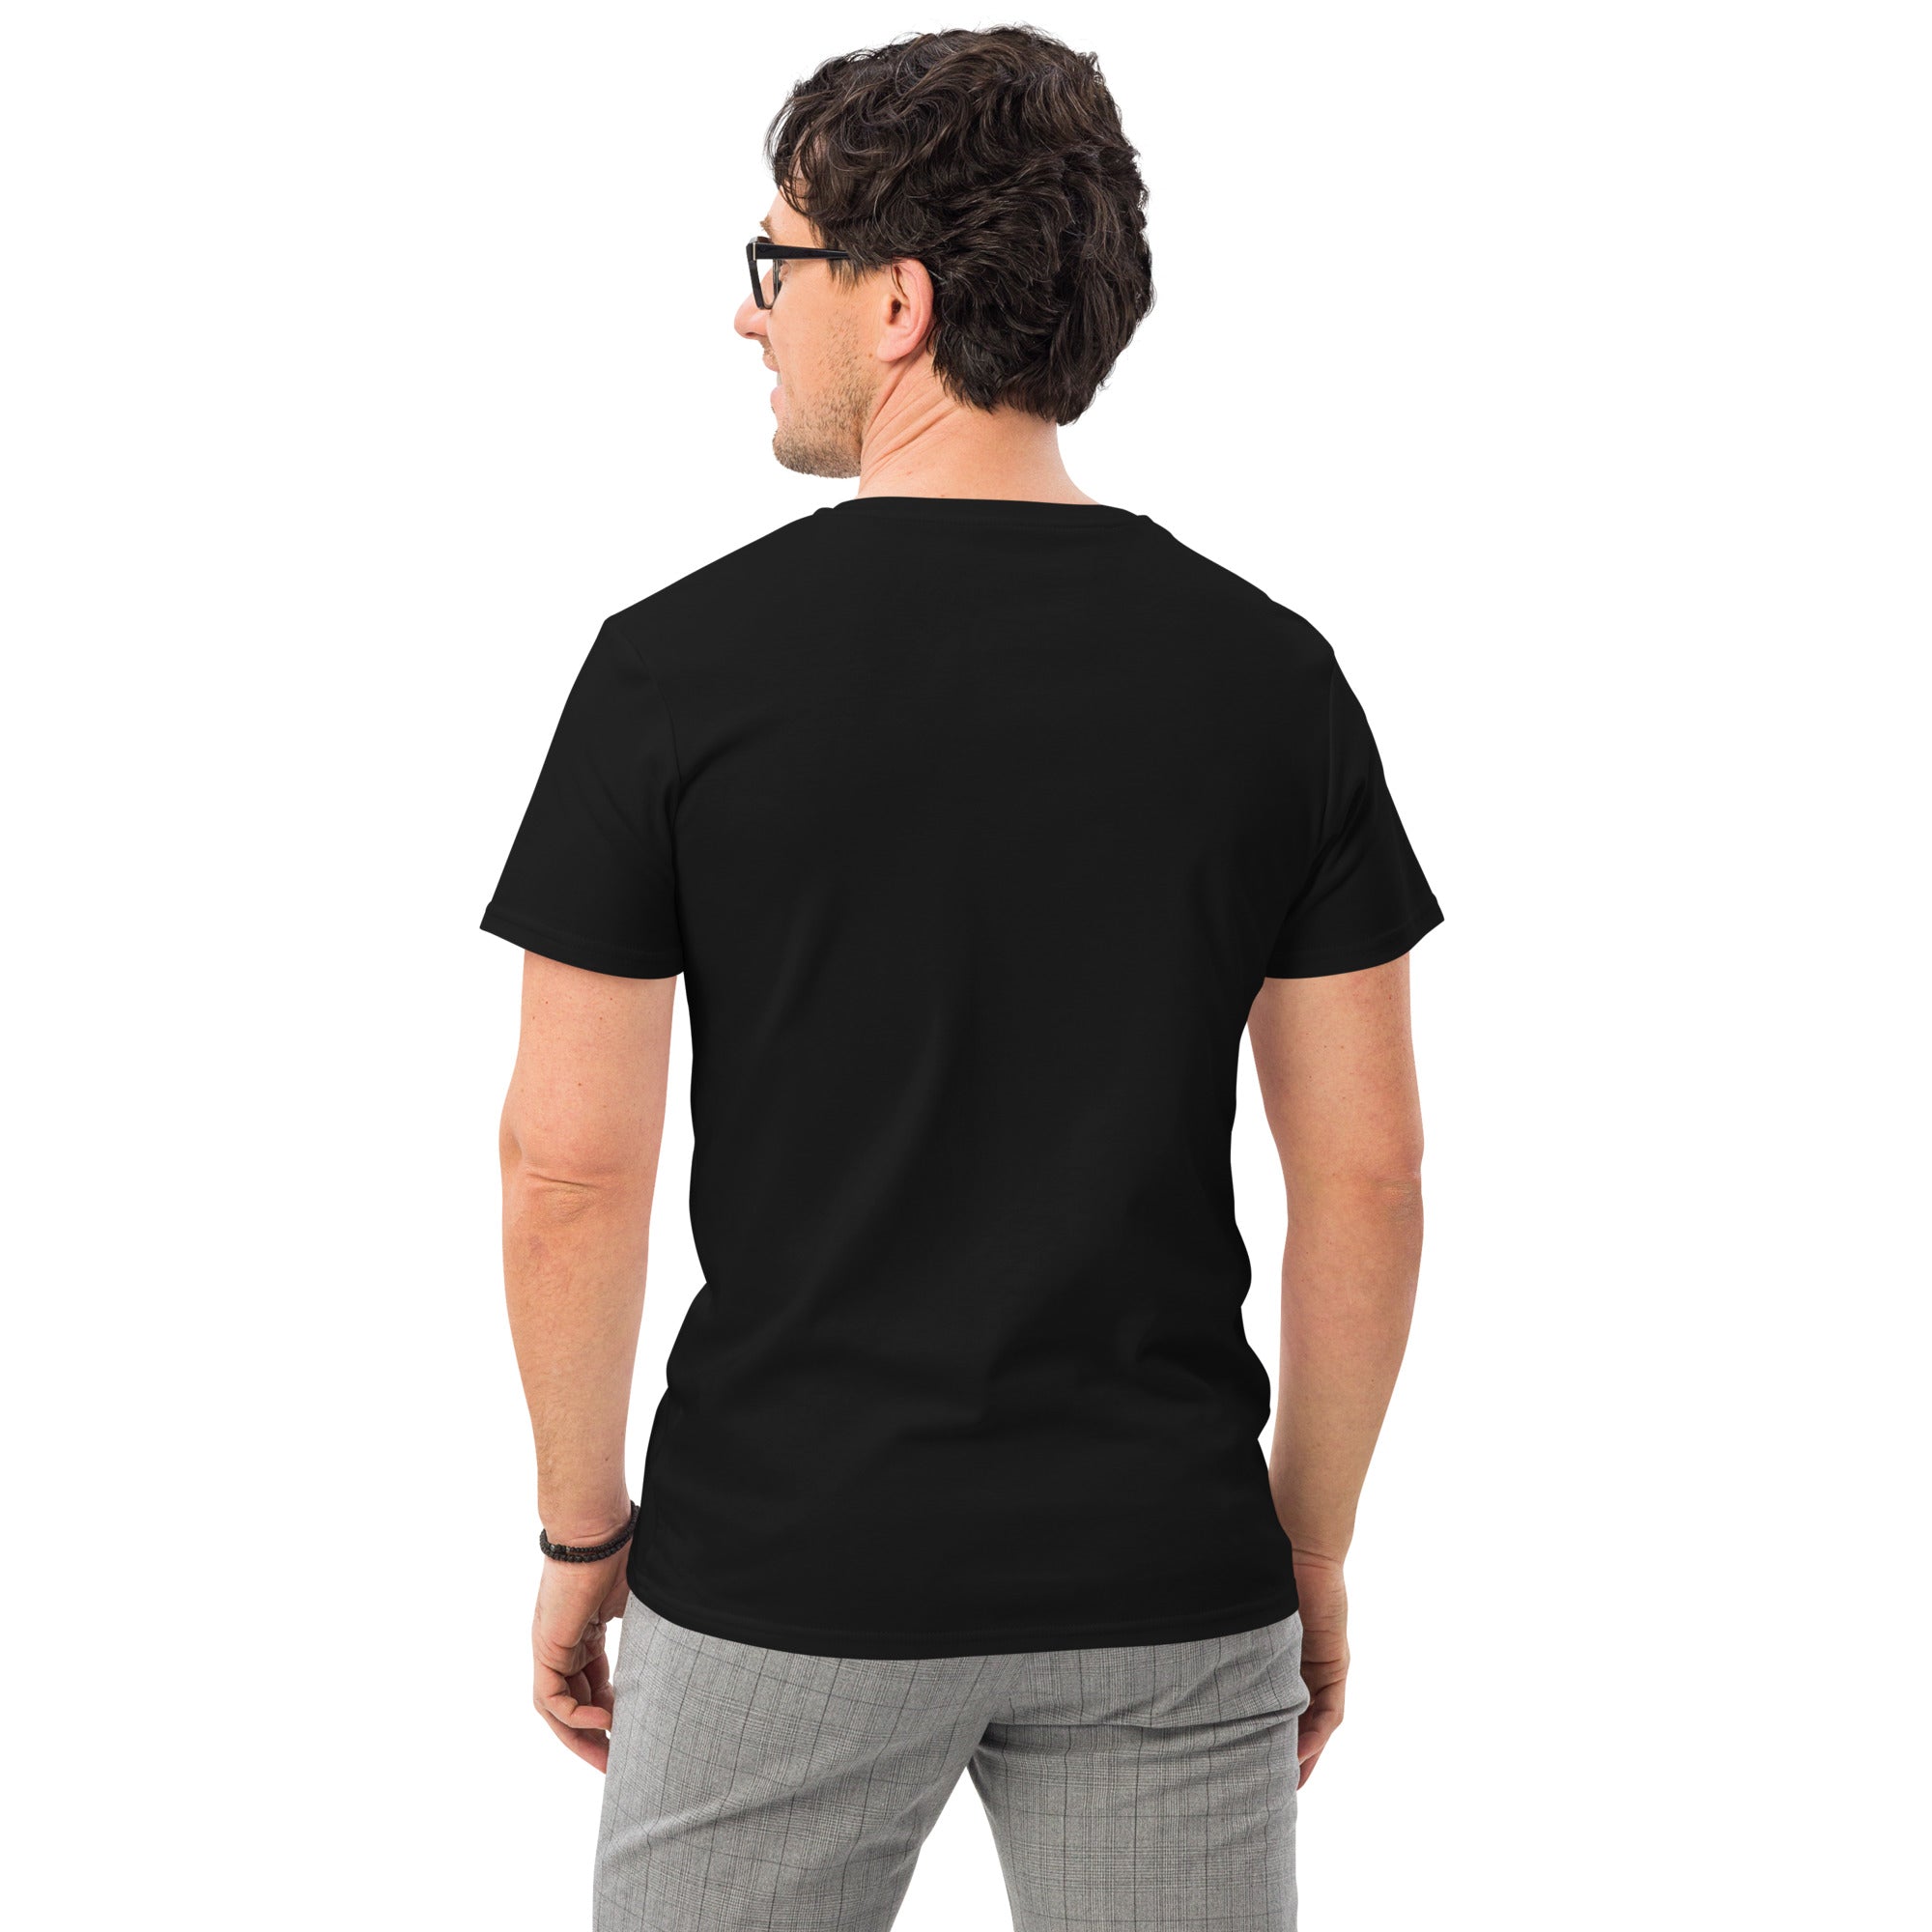 HEMA BLACK - T-Shirt aus Premium-Baumwolle